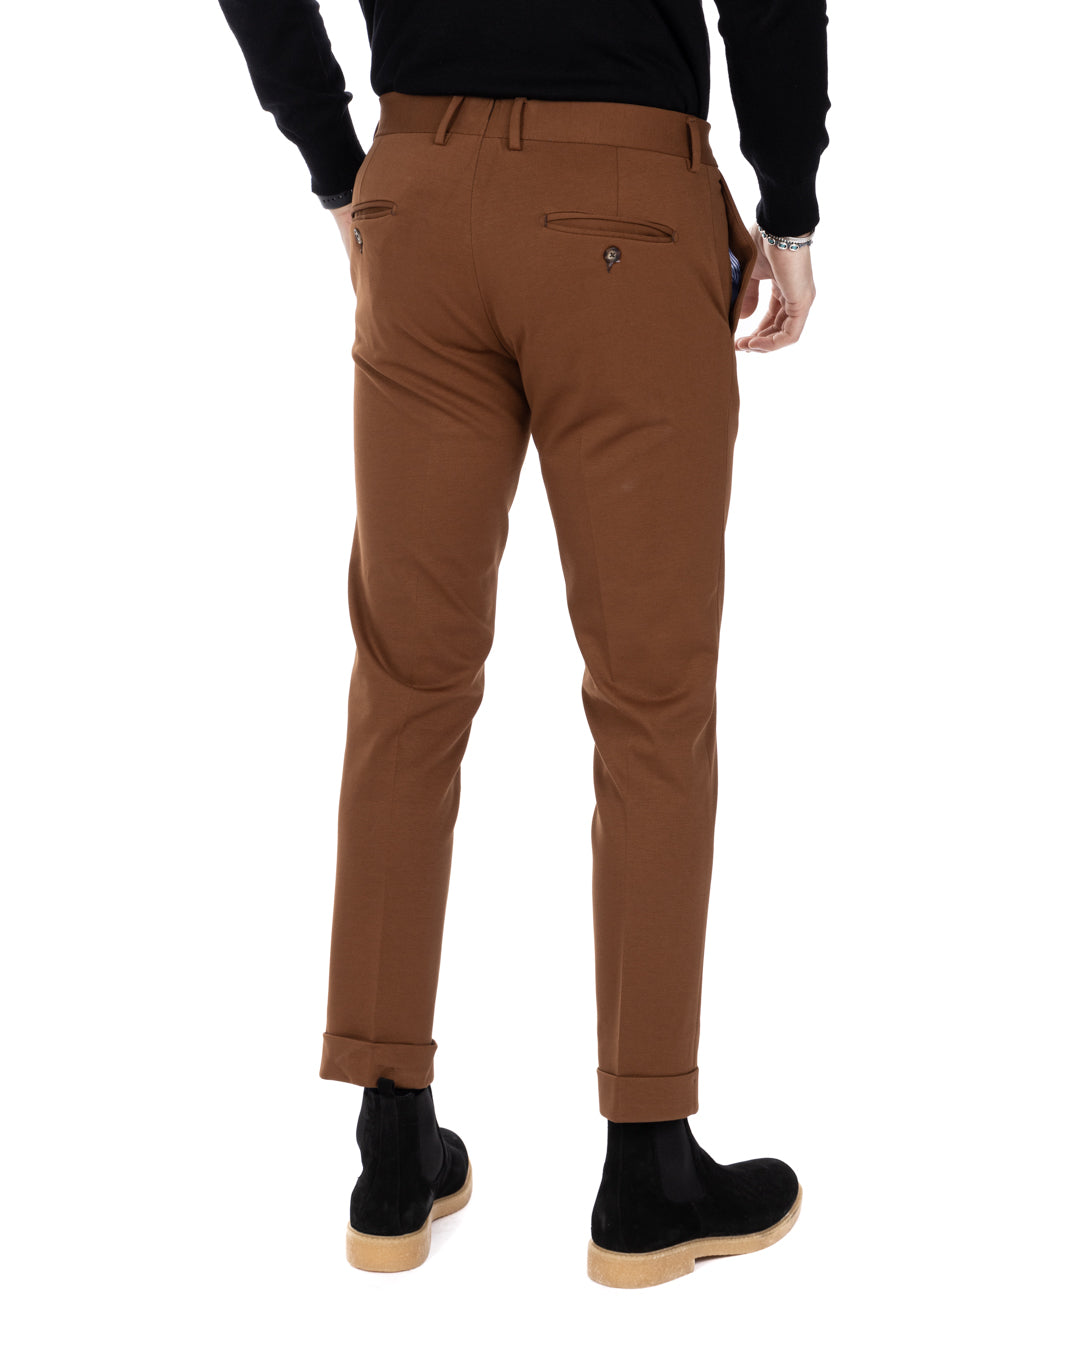 Altamura - pantalone classico marrone